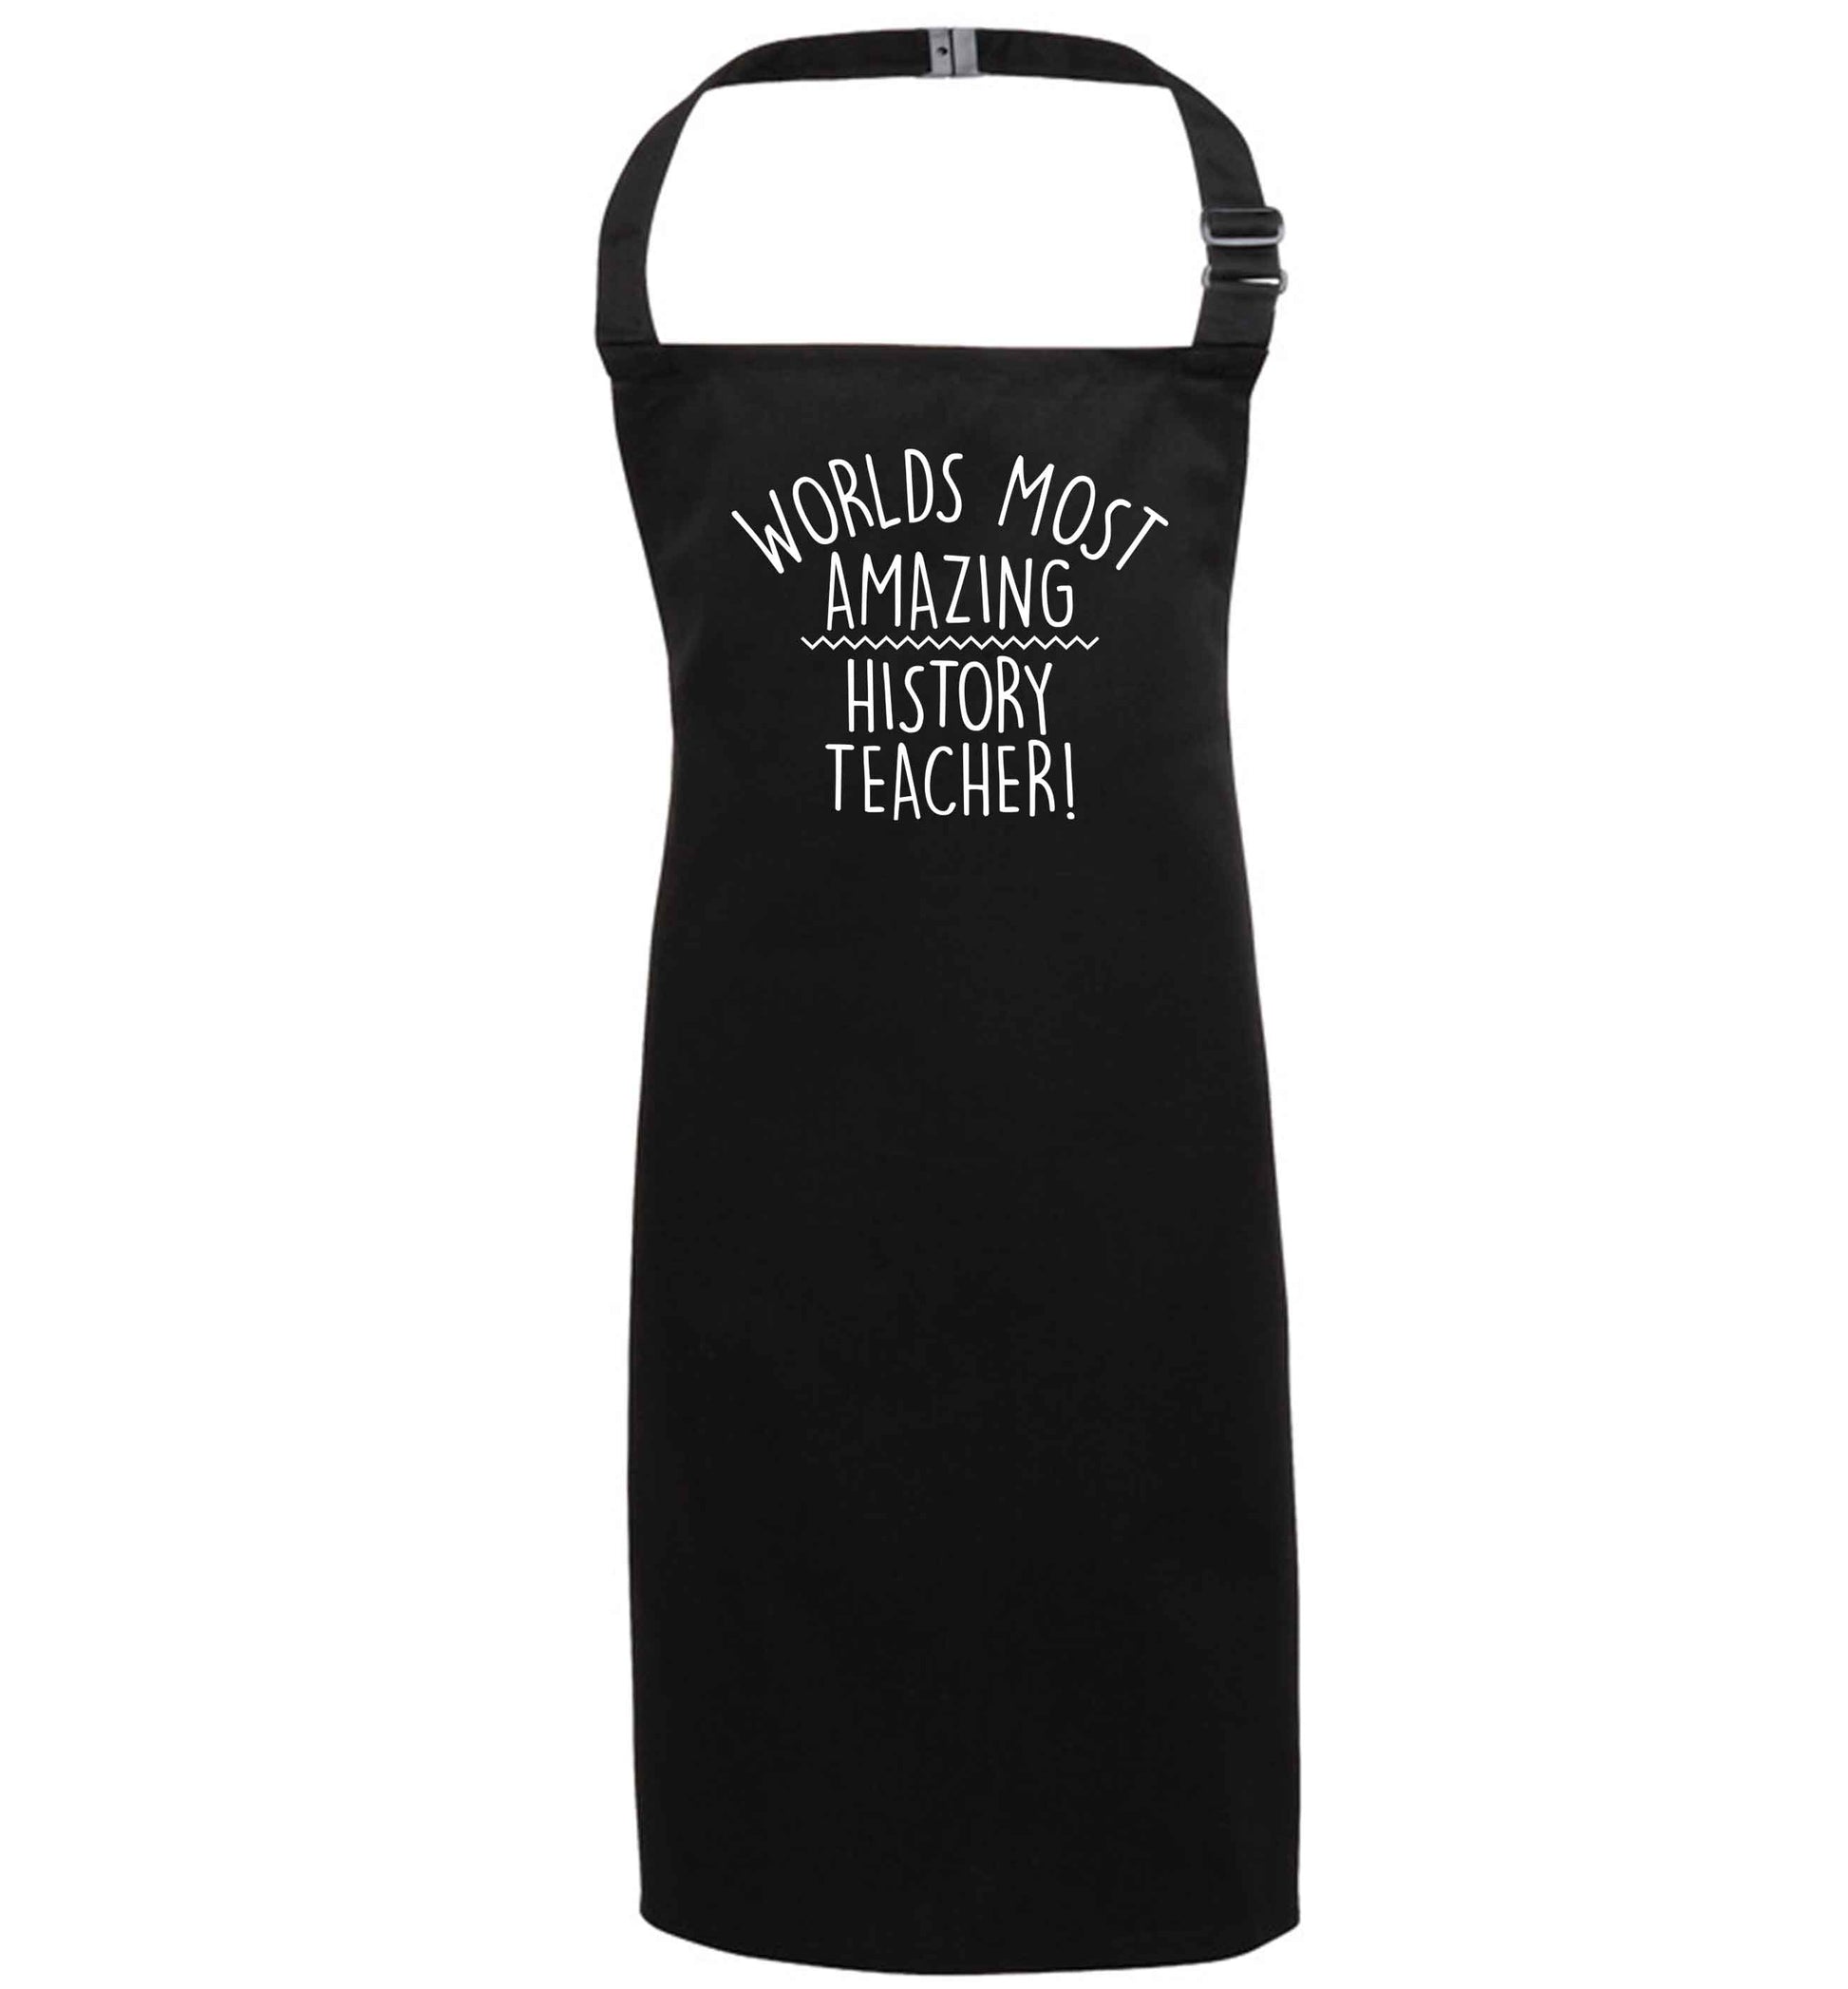 Worlds most amazing History teacher black apron 7-10 years